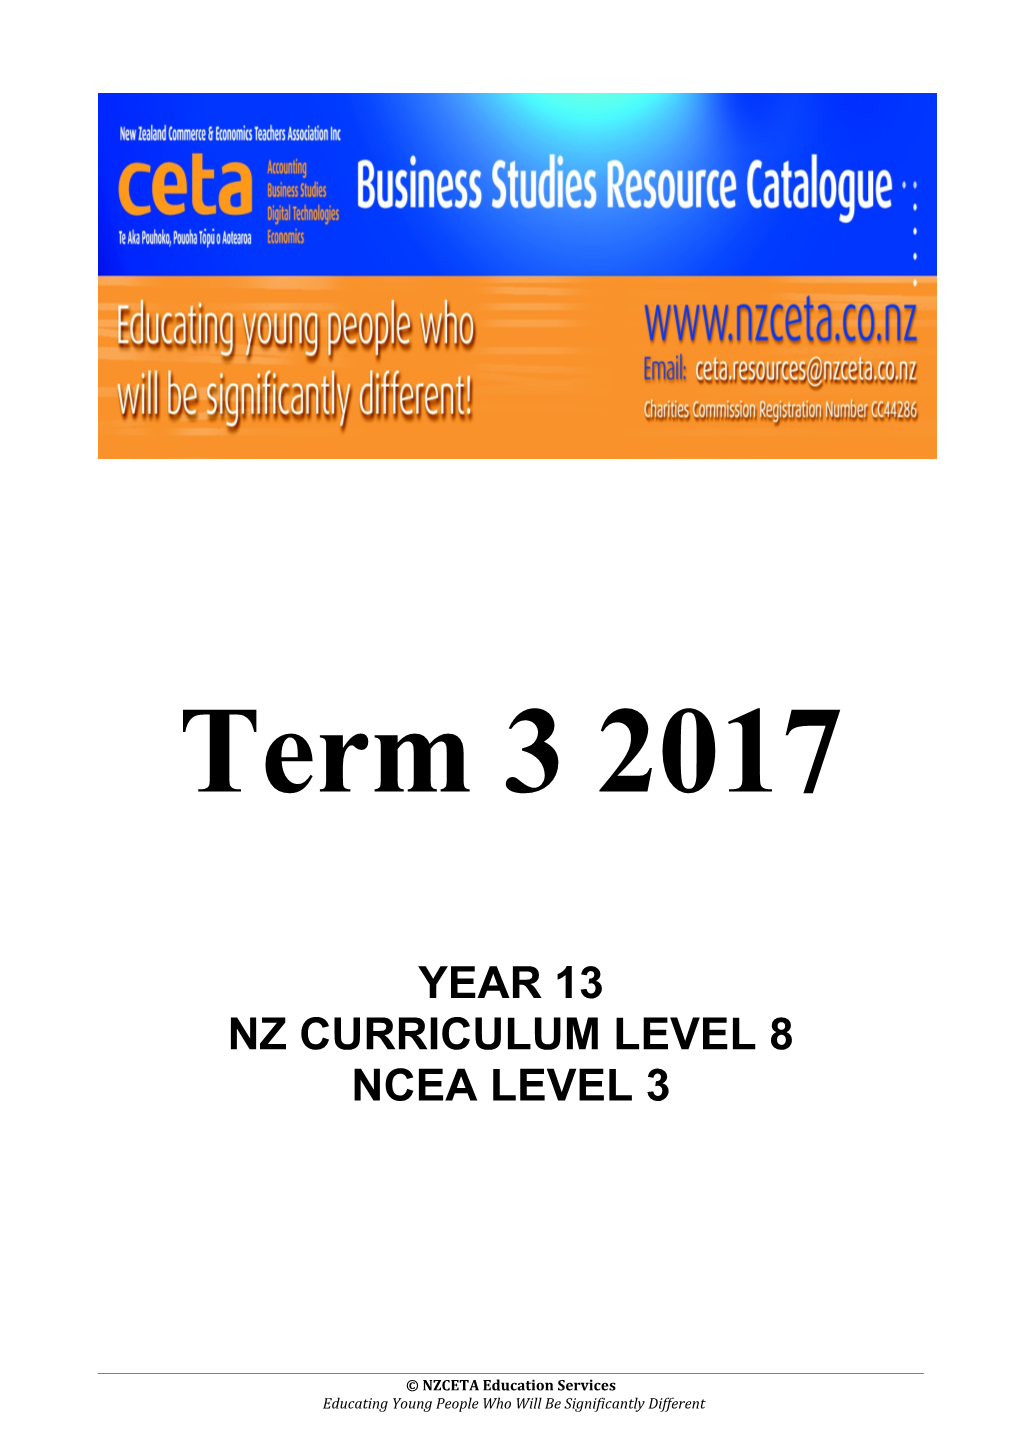 Nz Curriculum Level 8